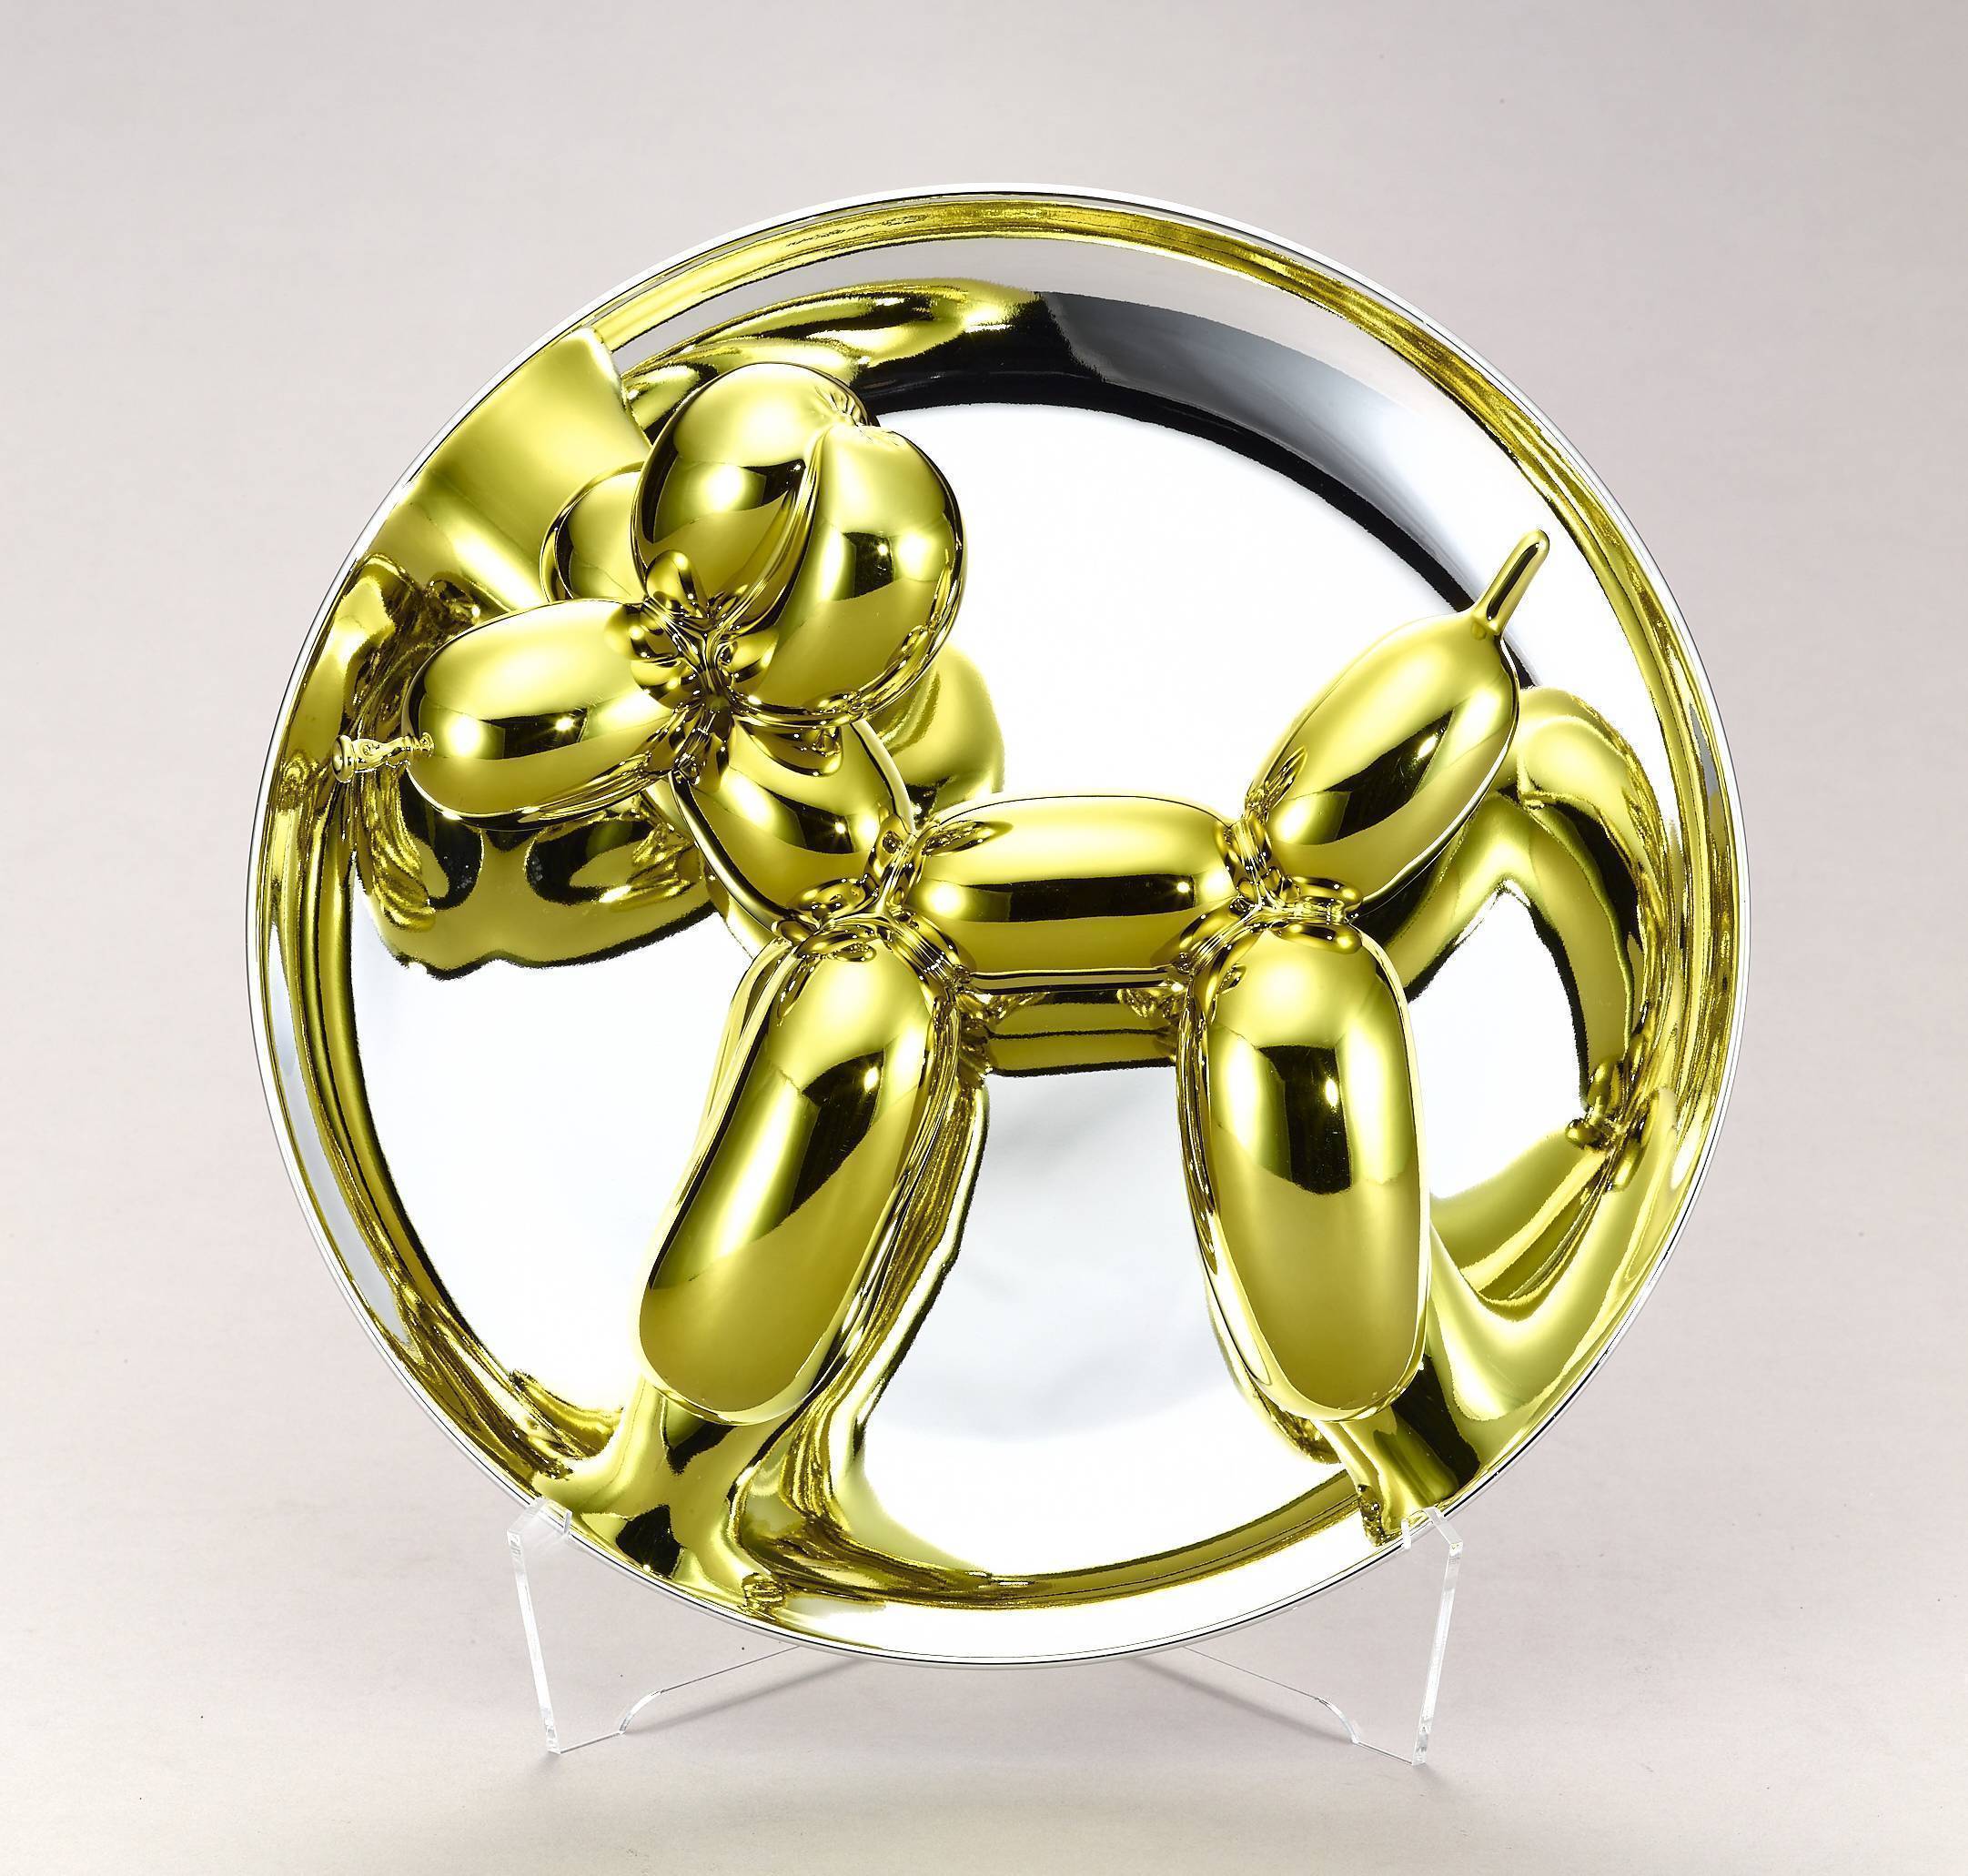 Balloon Dog (yellow) 氣球狗 （黃金）｜2015｜26.7 x 26.7 x 12.7 cm｜Porcelain 陶瓷｜© Jeff Koons